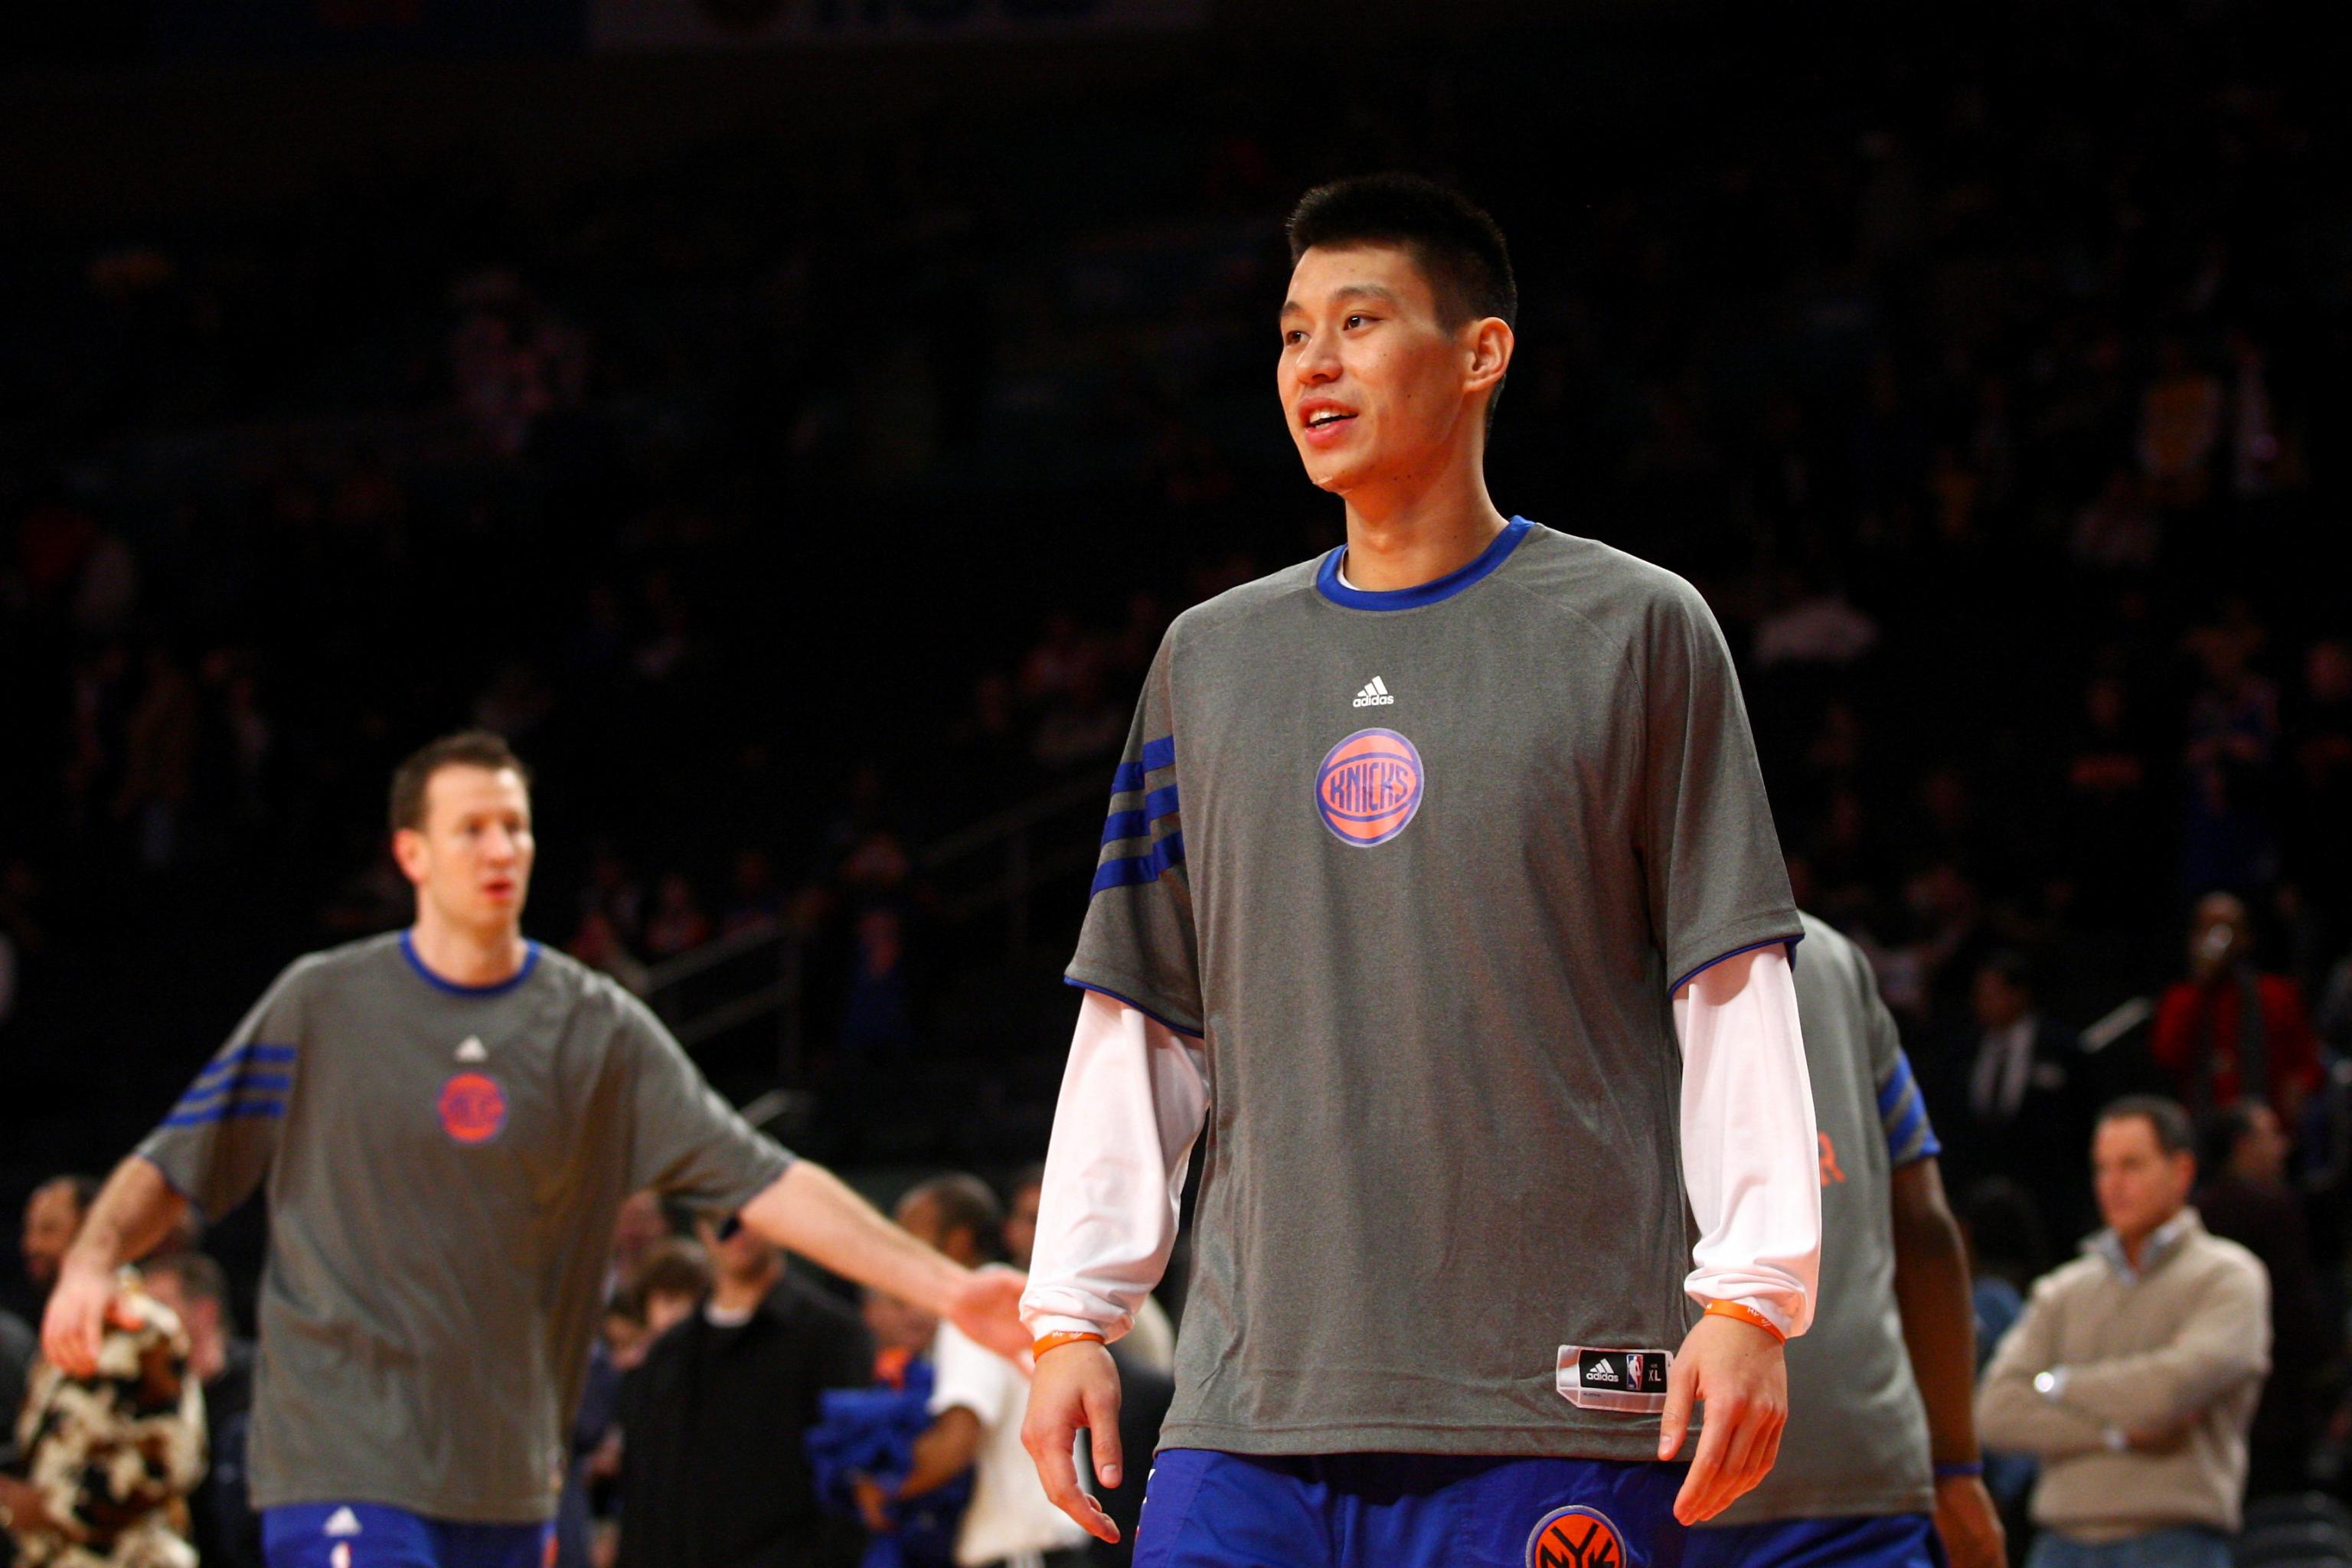 NBA New York Knicks NYK basketball Adidas jersey #17 Lin size